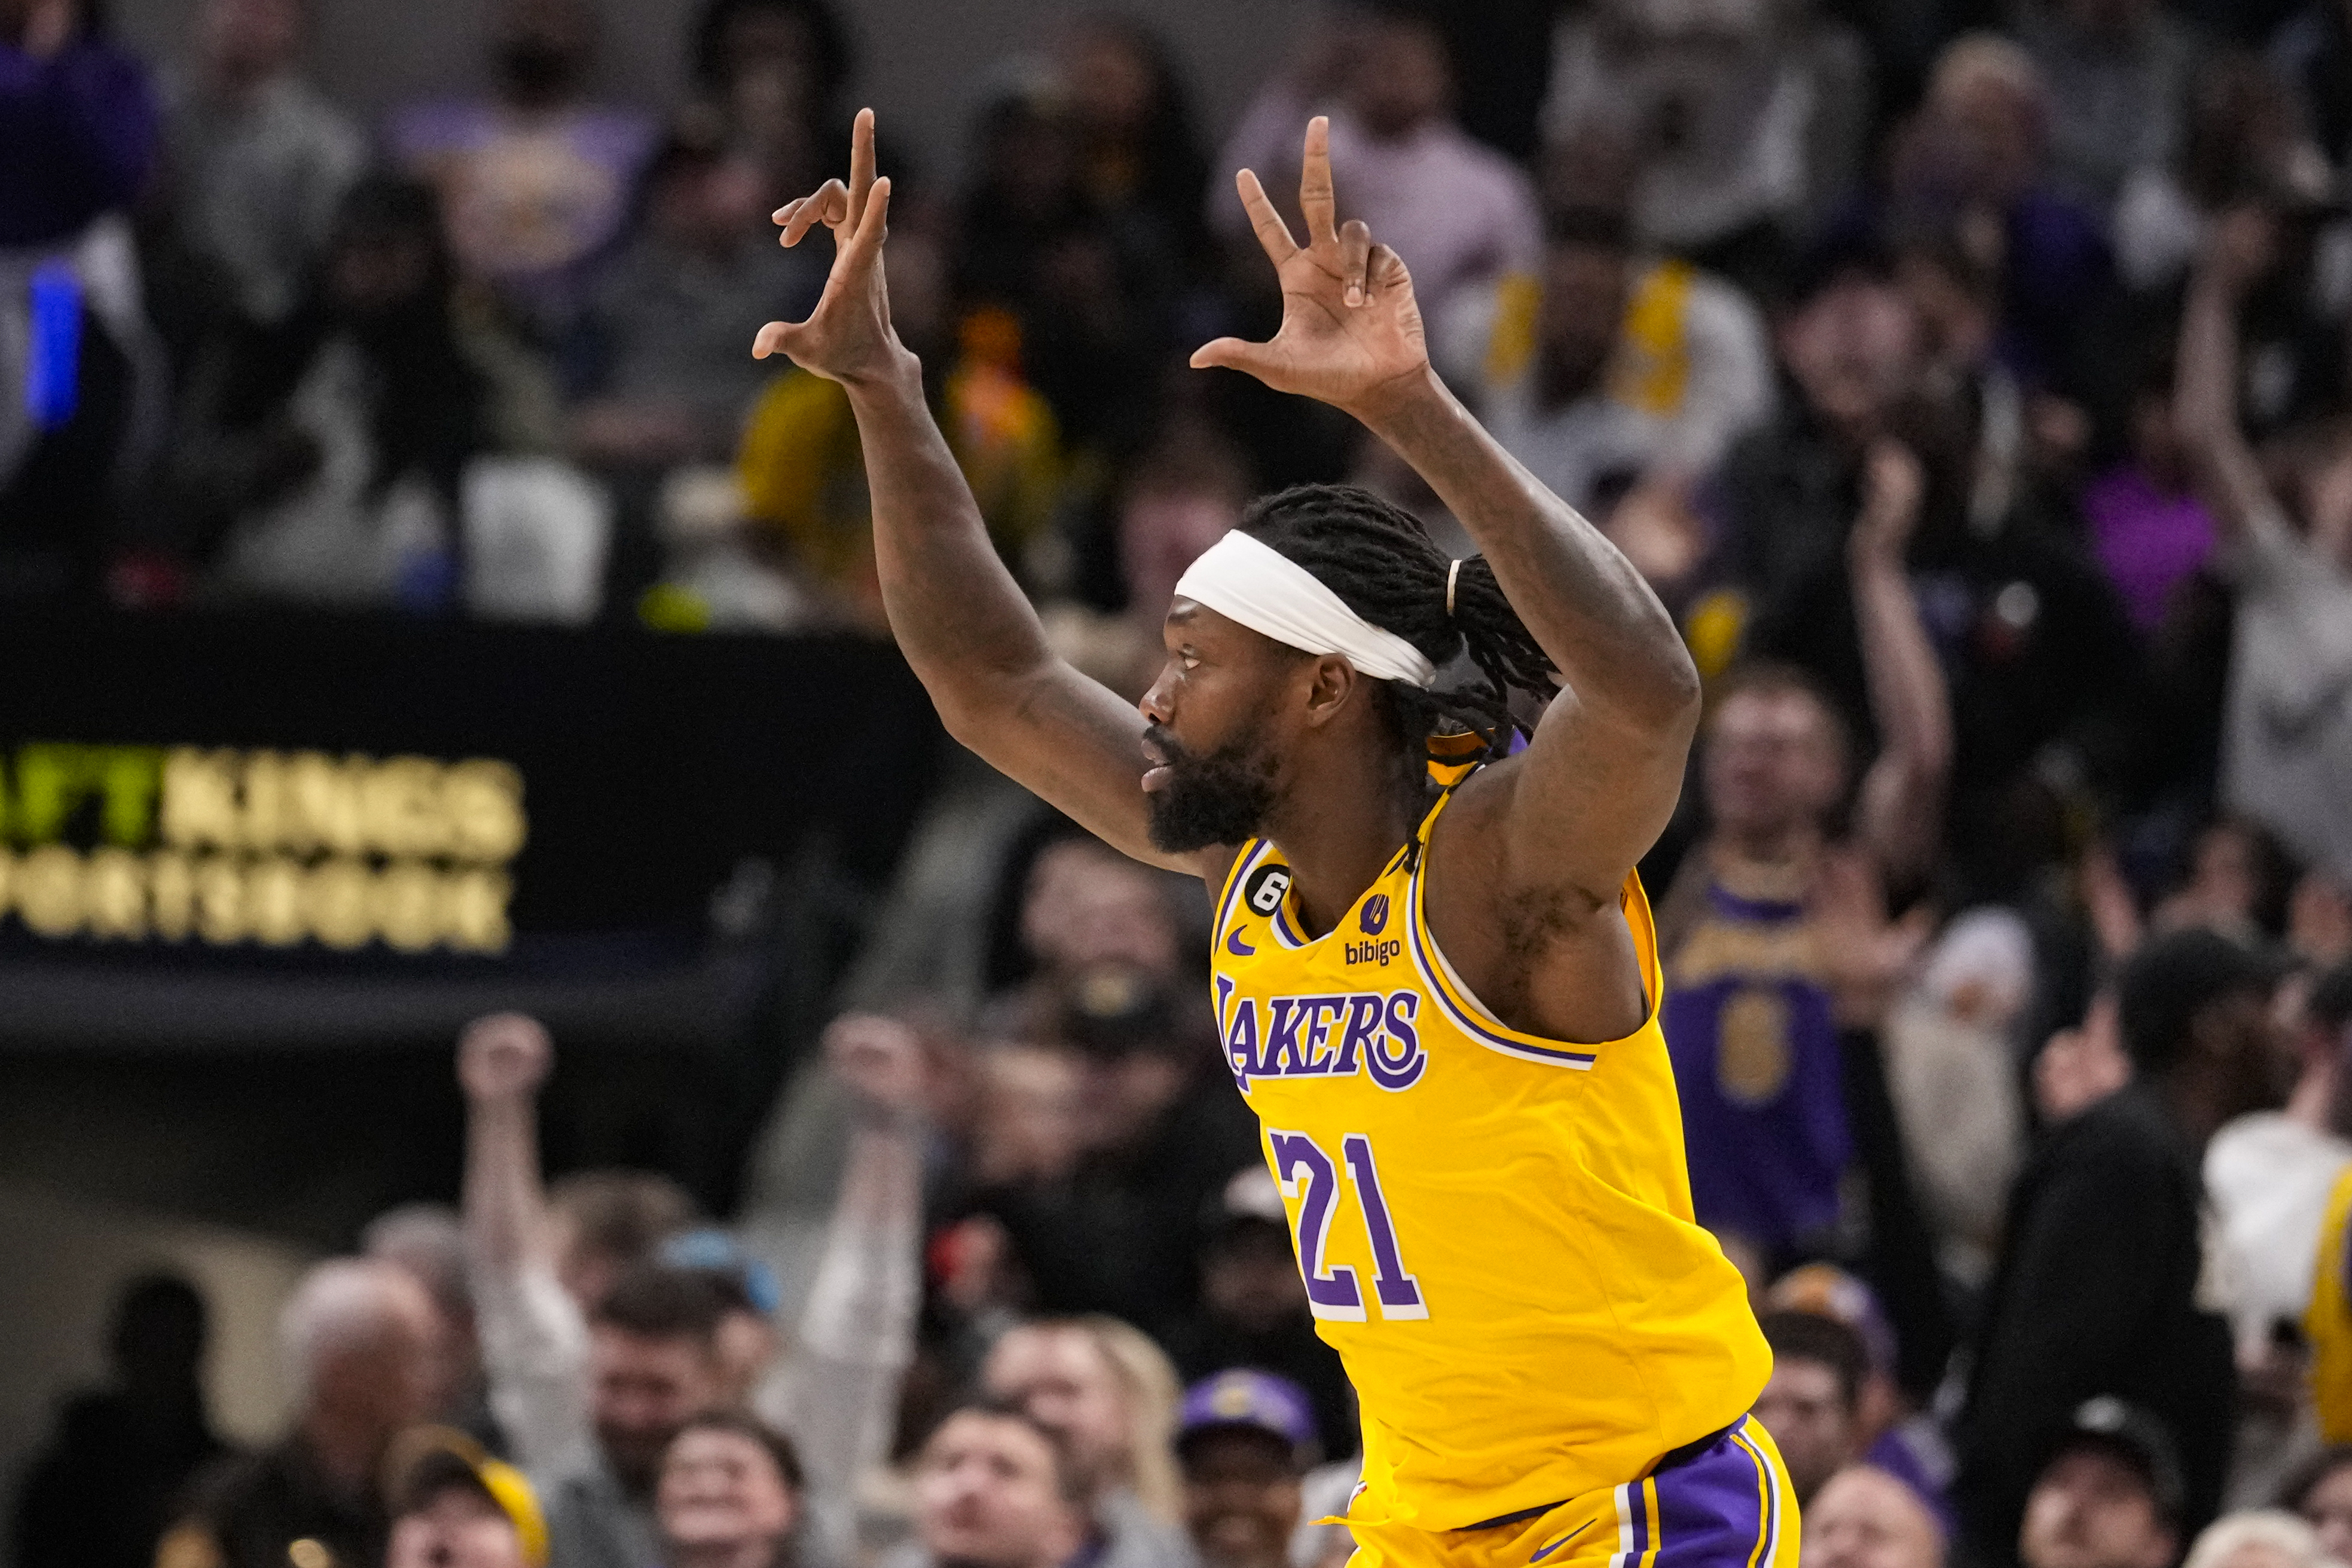 Photos: Lakers at Bulls (1/23/21) Photo Gallery